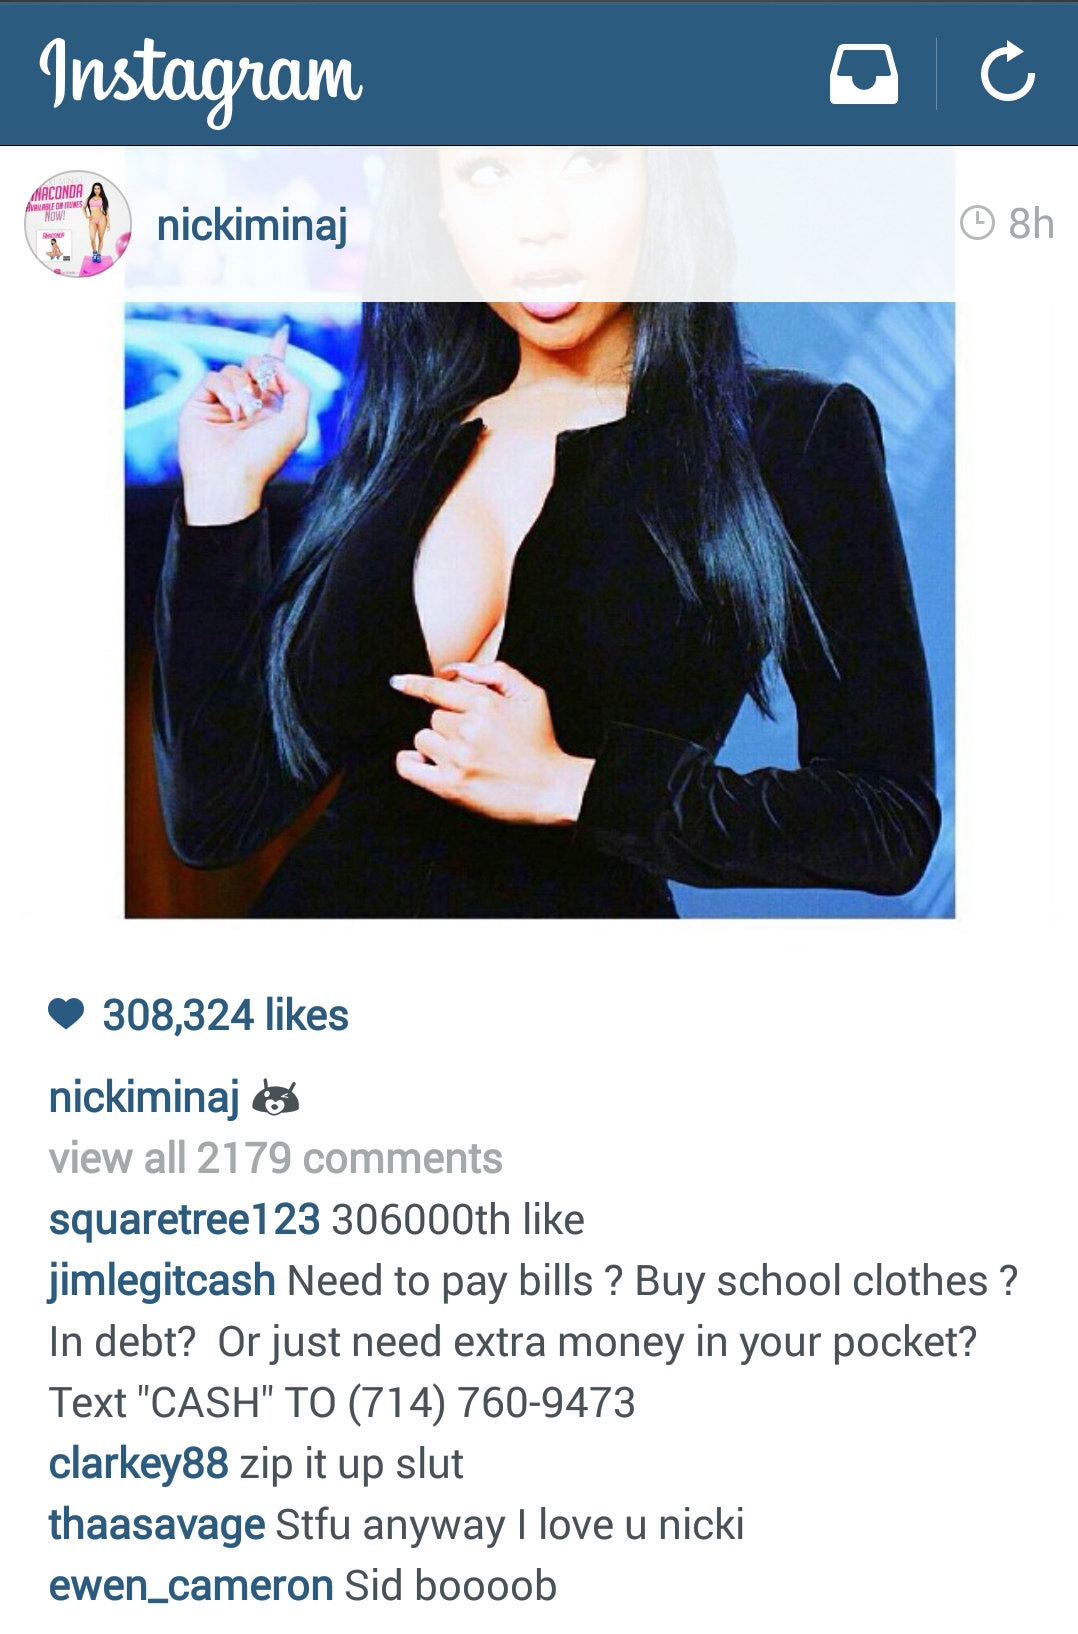 VMA Edition of Insane Instagram Comments: Nicki Minaj - The Average Nobodies